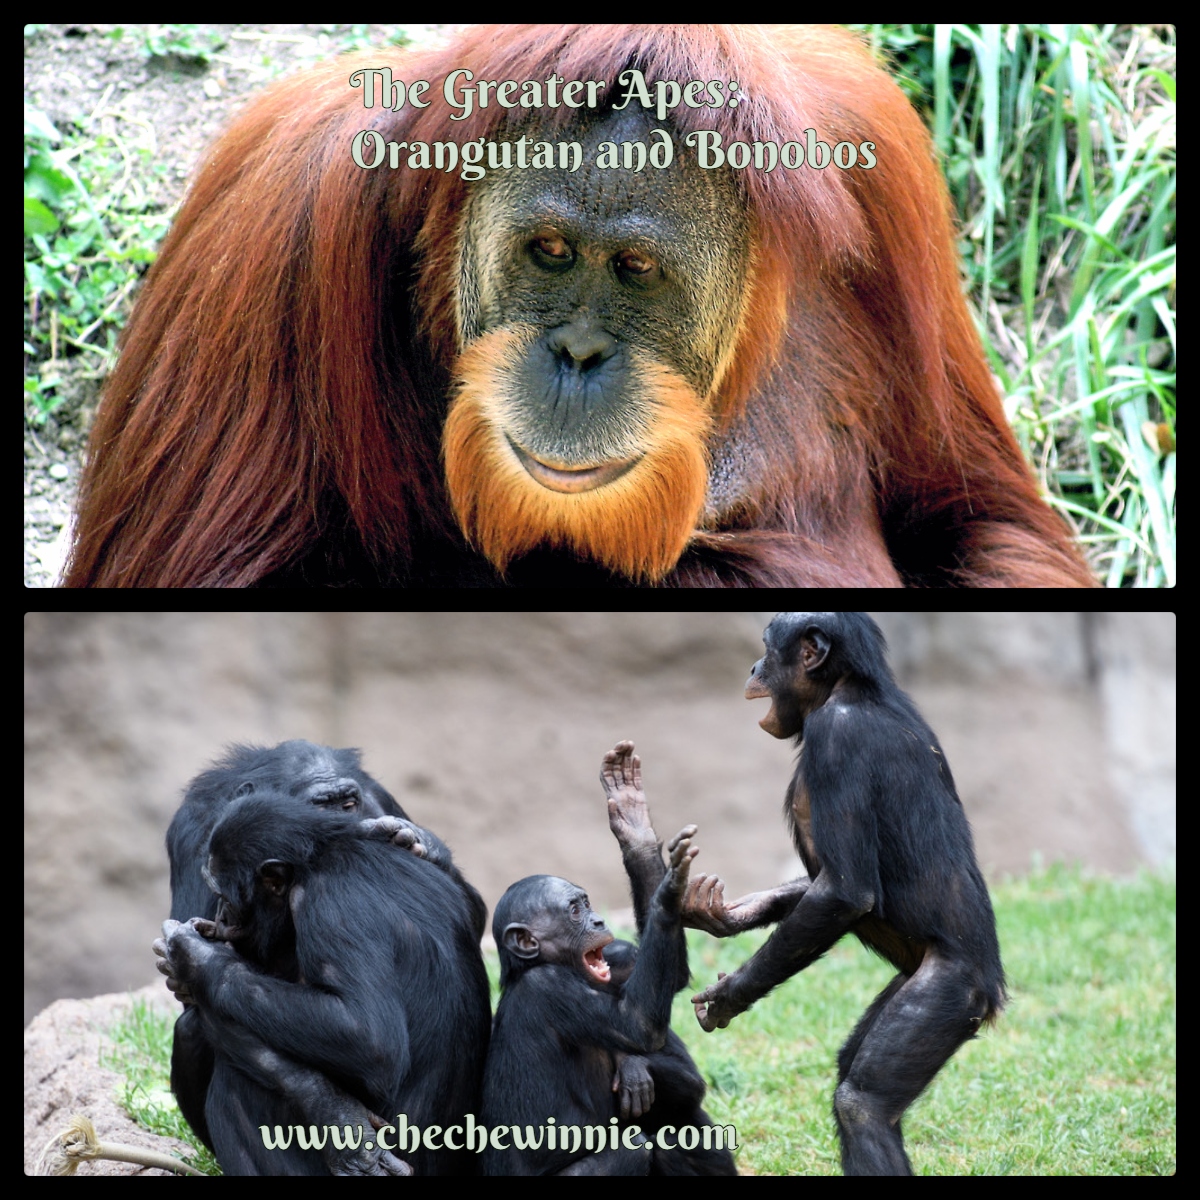 The Greater Apes: Orangutan and Bonobos